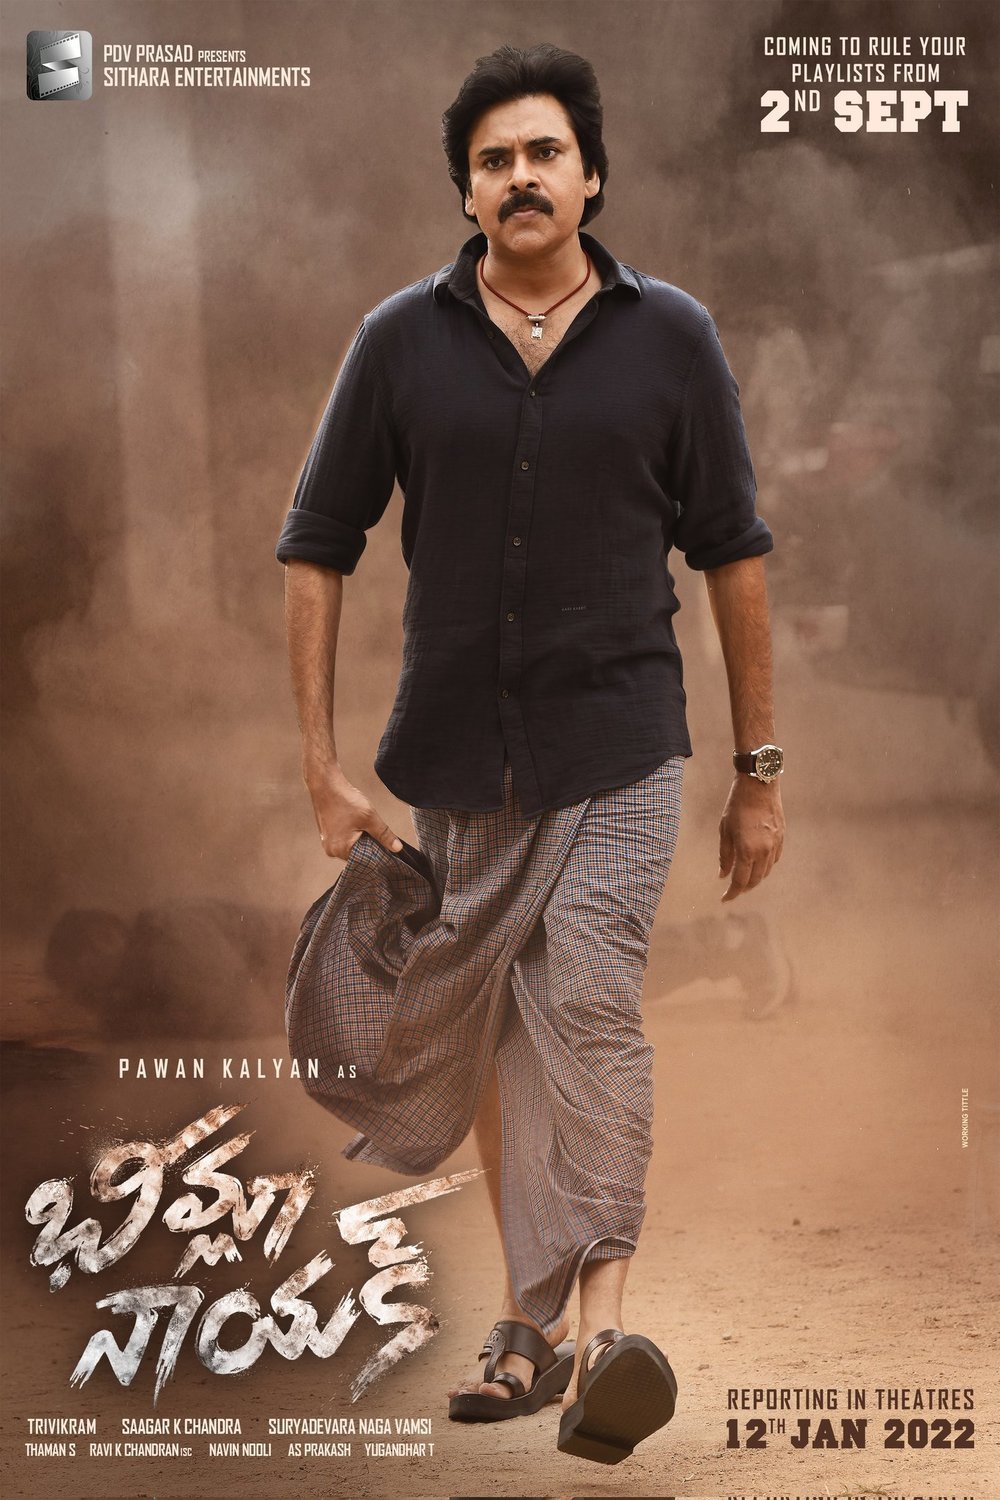 Telugu poster of the movie Bheemla Nayak